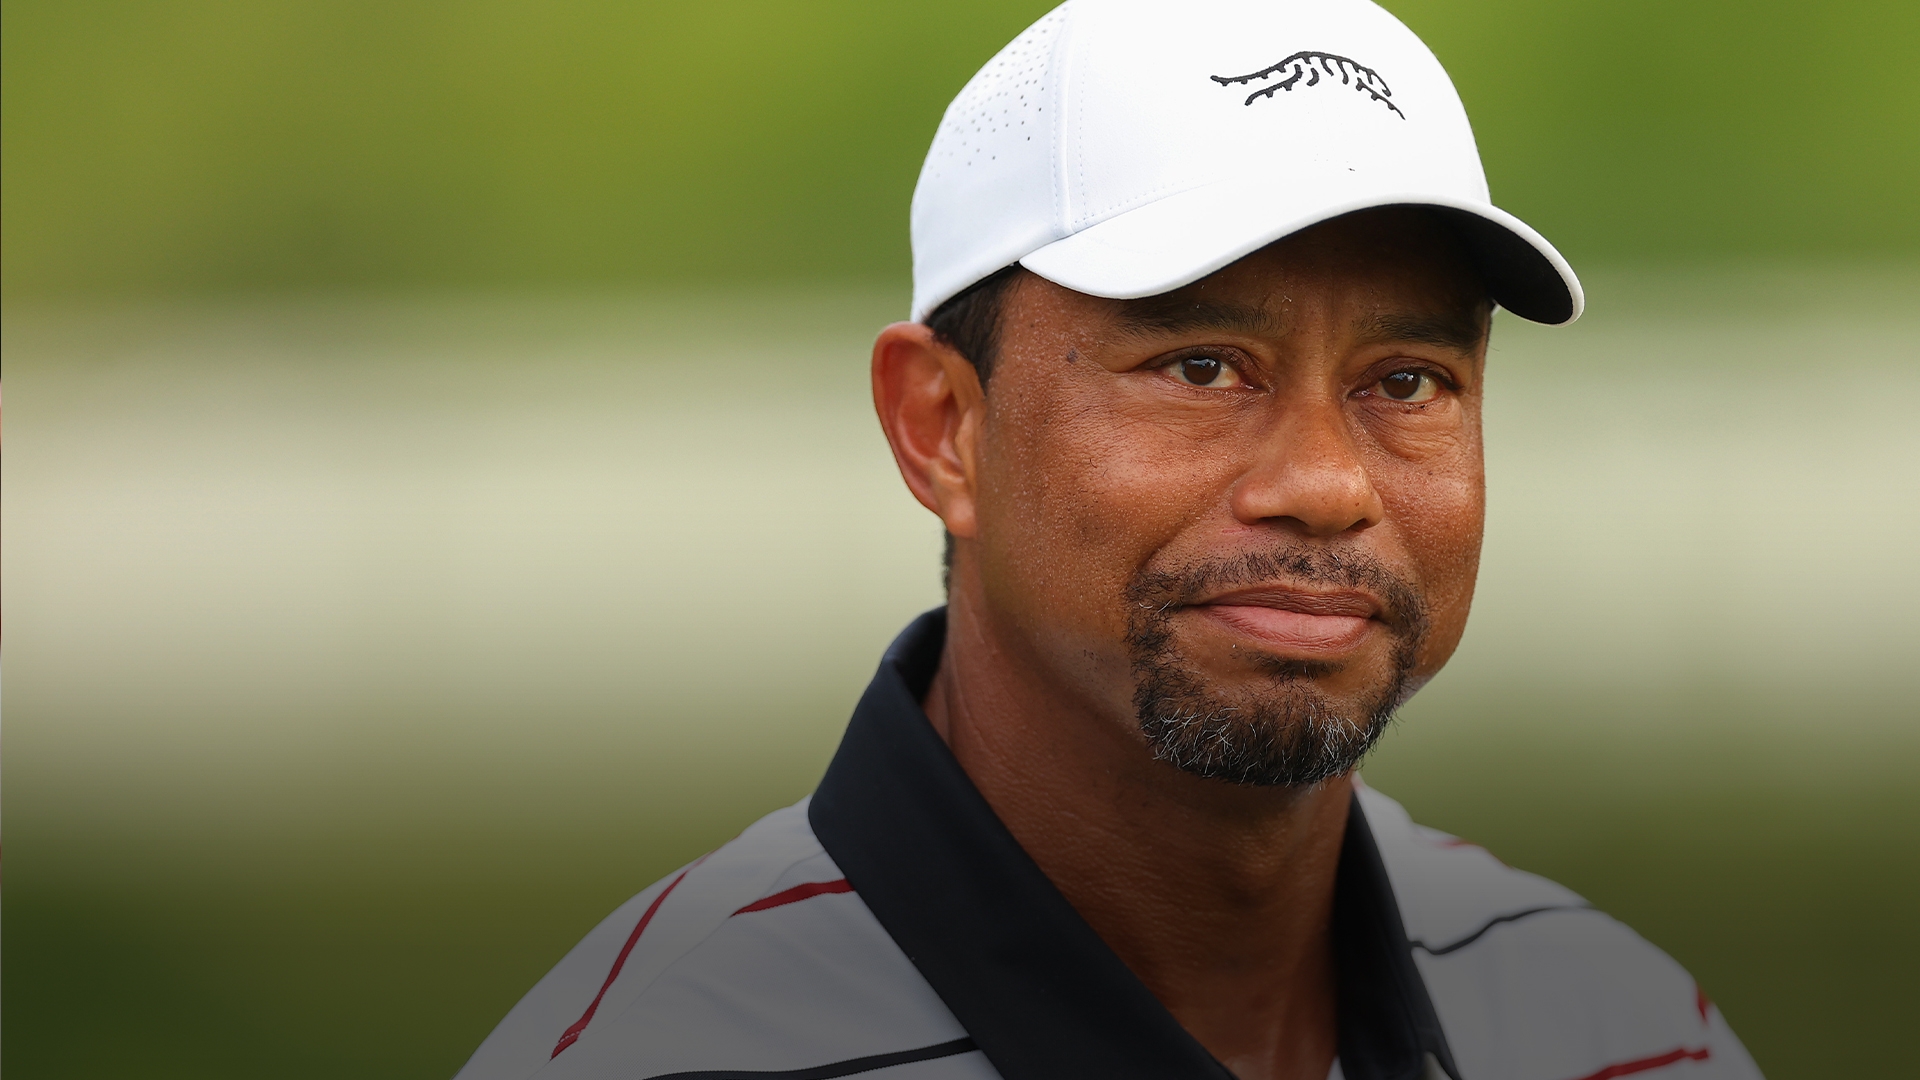 Tiger Woods birdies 18 to finish Round 2, still misses cut